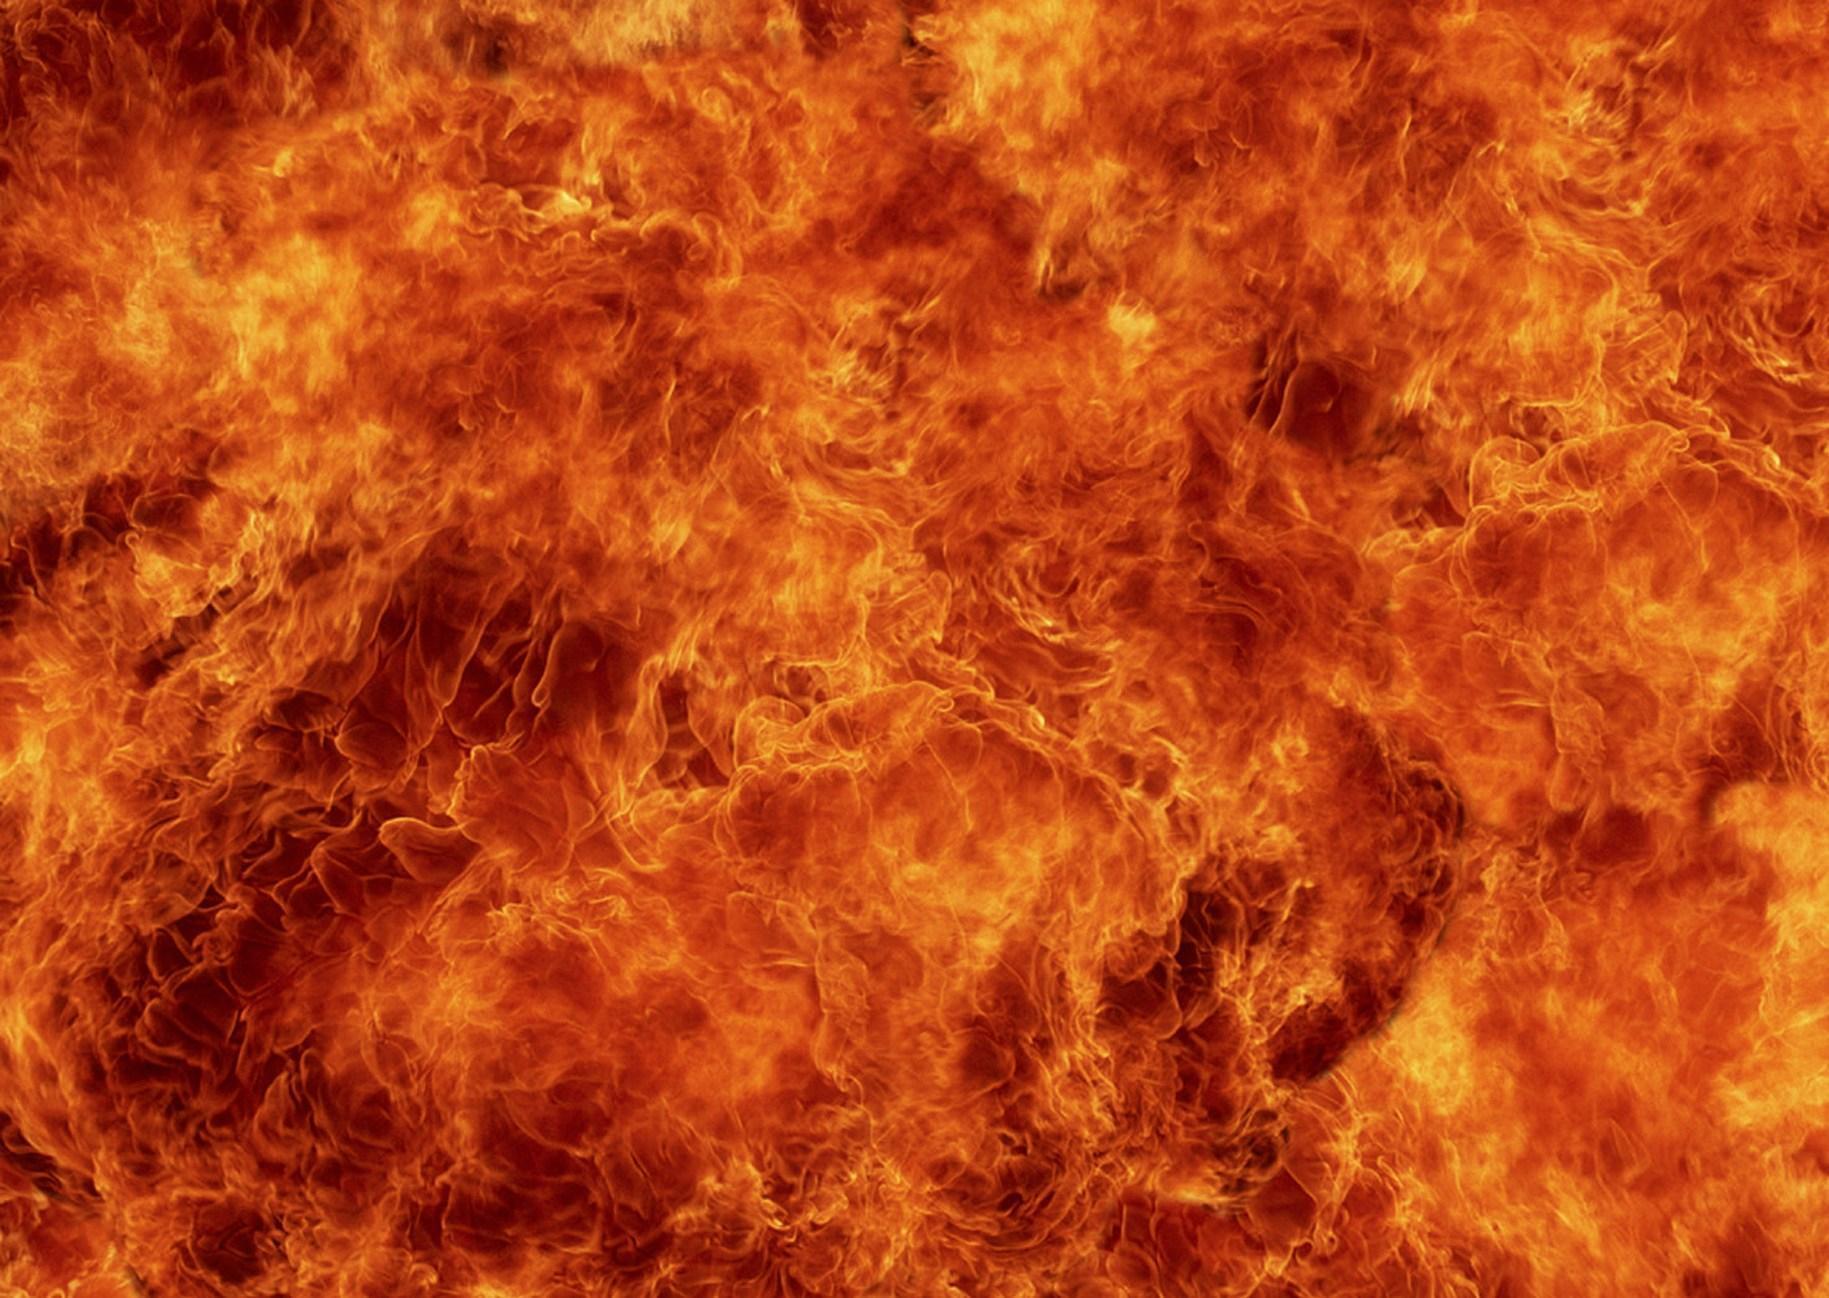 Fire explosion free desktop background wallpaper image